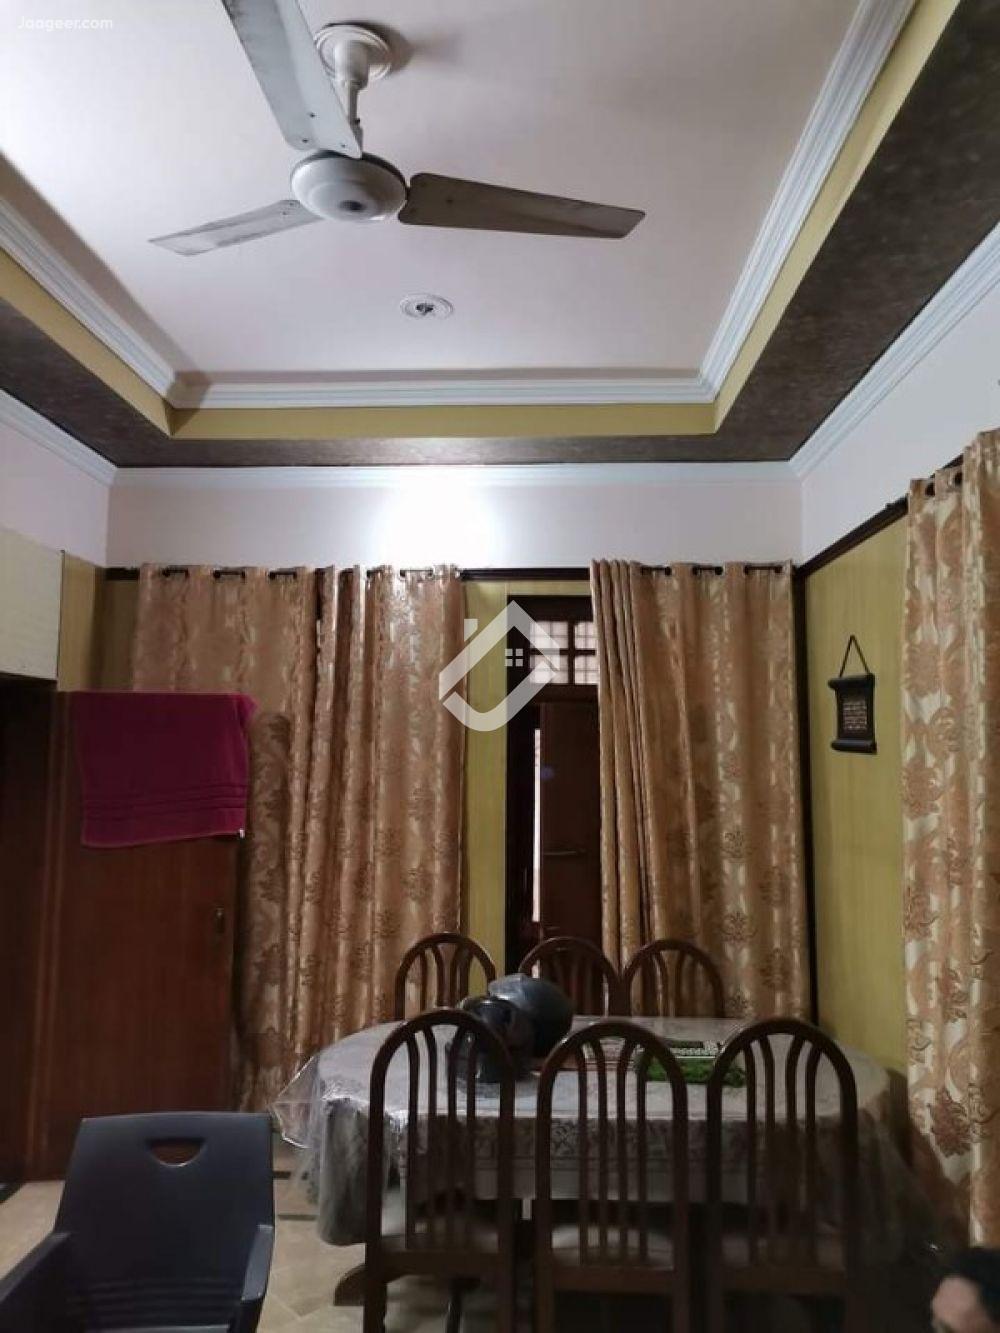 View  5 Marla House Availabe For Sale In Samundri Road in Samundri Road, Faisalabad